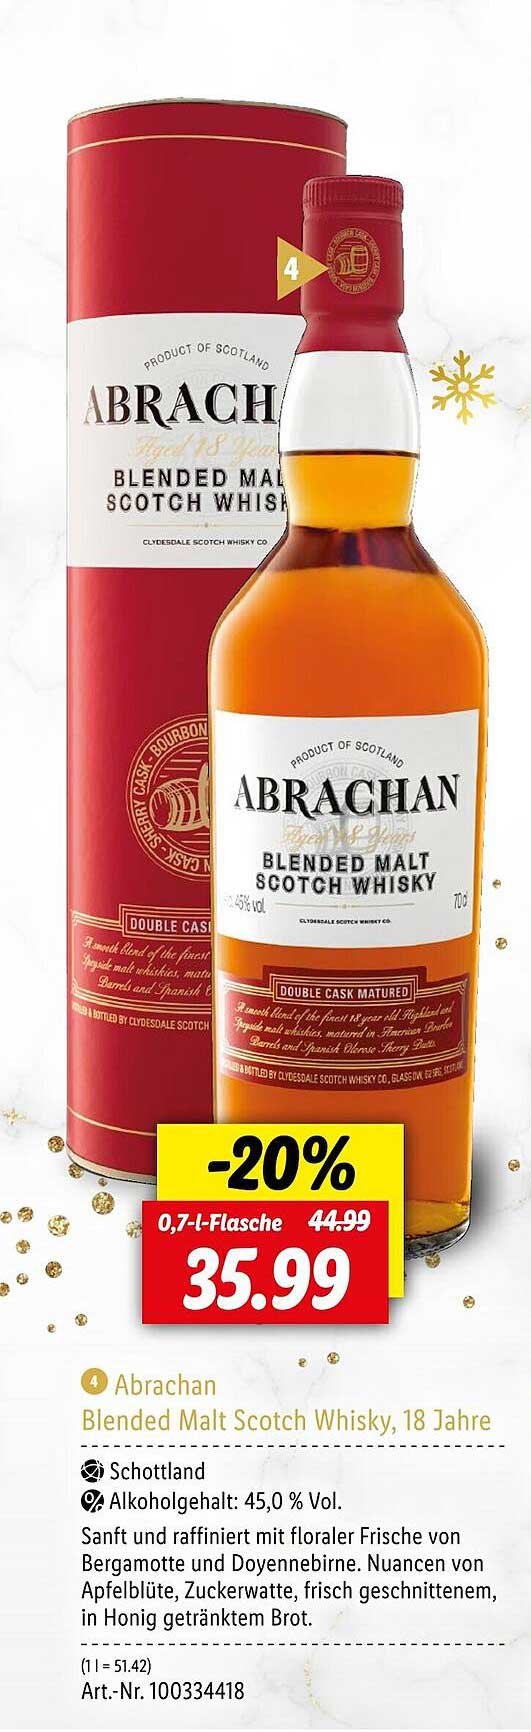 Abrachan Blended Angebot 18 Whisky, Scotch Malt Jahre bei Lidl